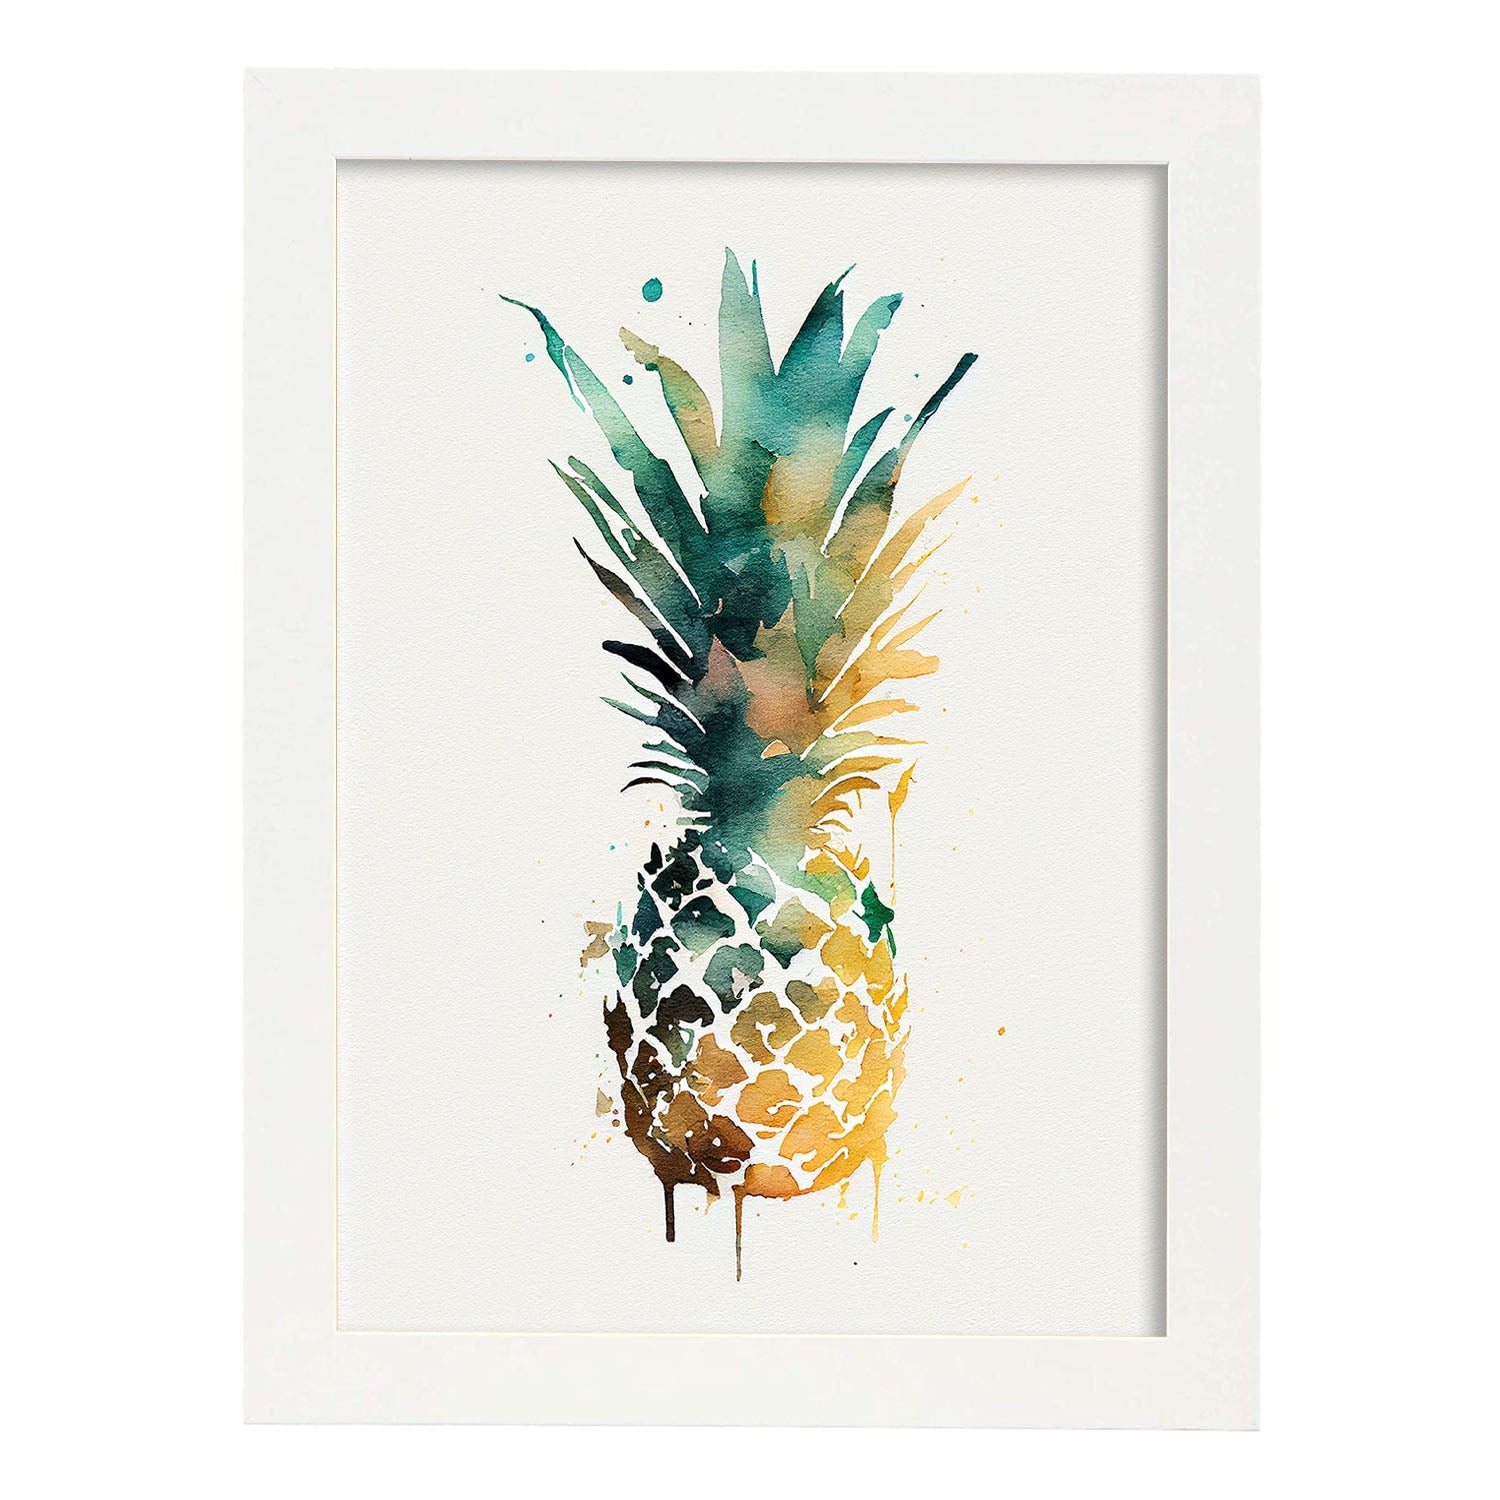 Nacnic minimalist Pineapple_5. Aesthetic Wall Art Prints for Bedroom or Living Room Design.-Artwork-Nacnic-A4-Marco Blanco-Nacnic Estudio SL